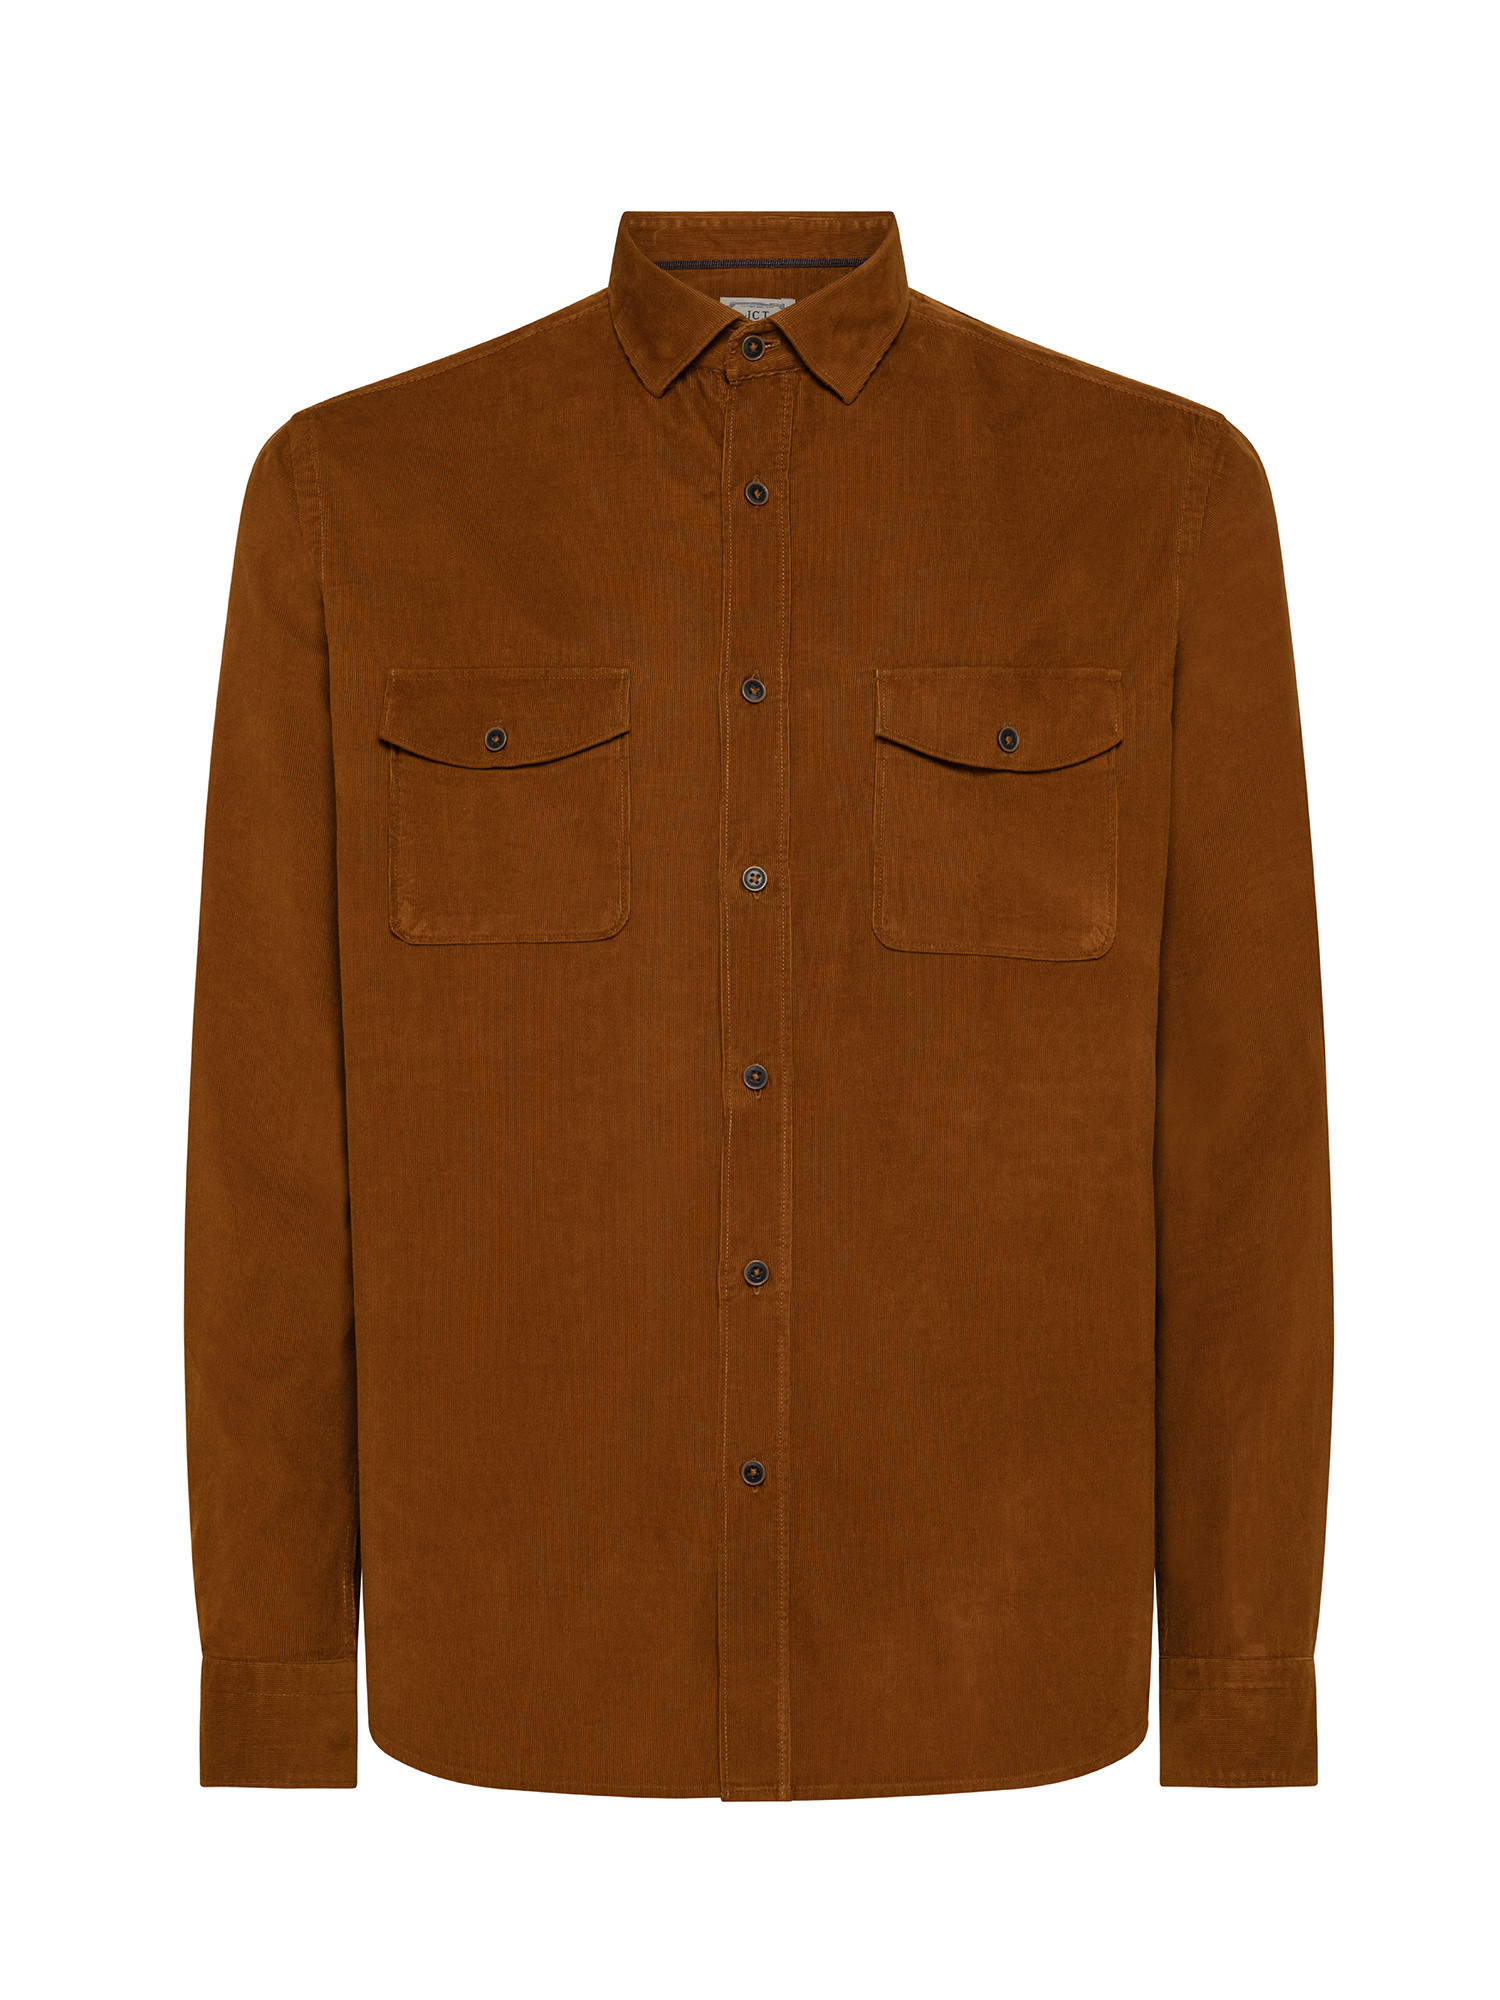 JCT - Cotton velvet shirt, Copper Brown, large image number 0